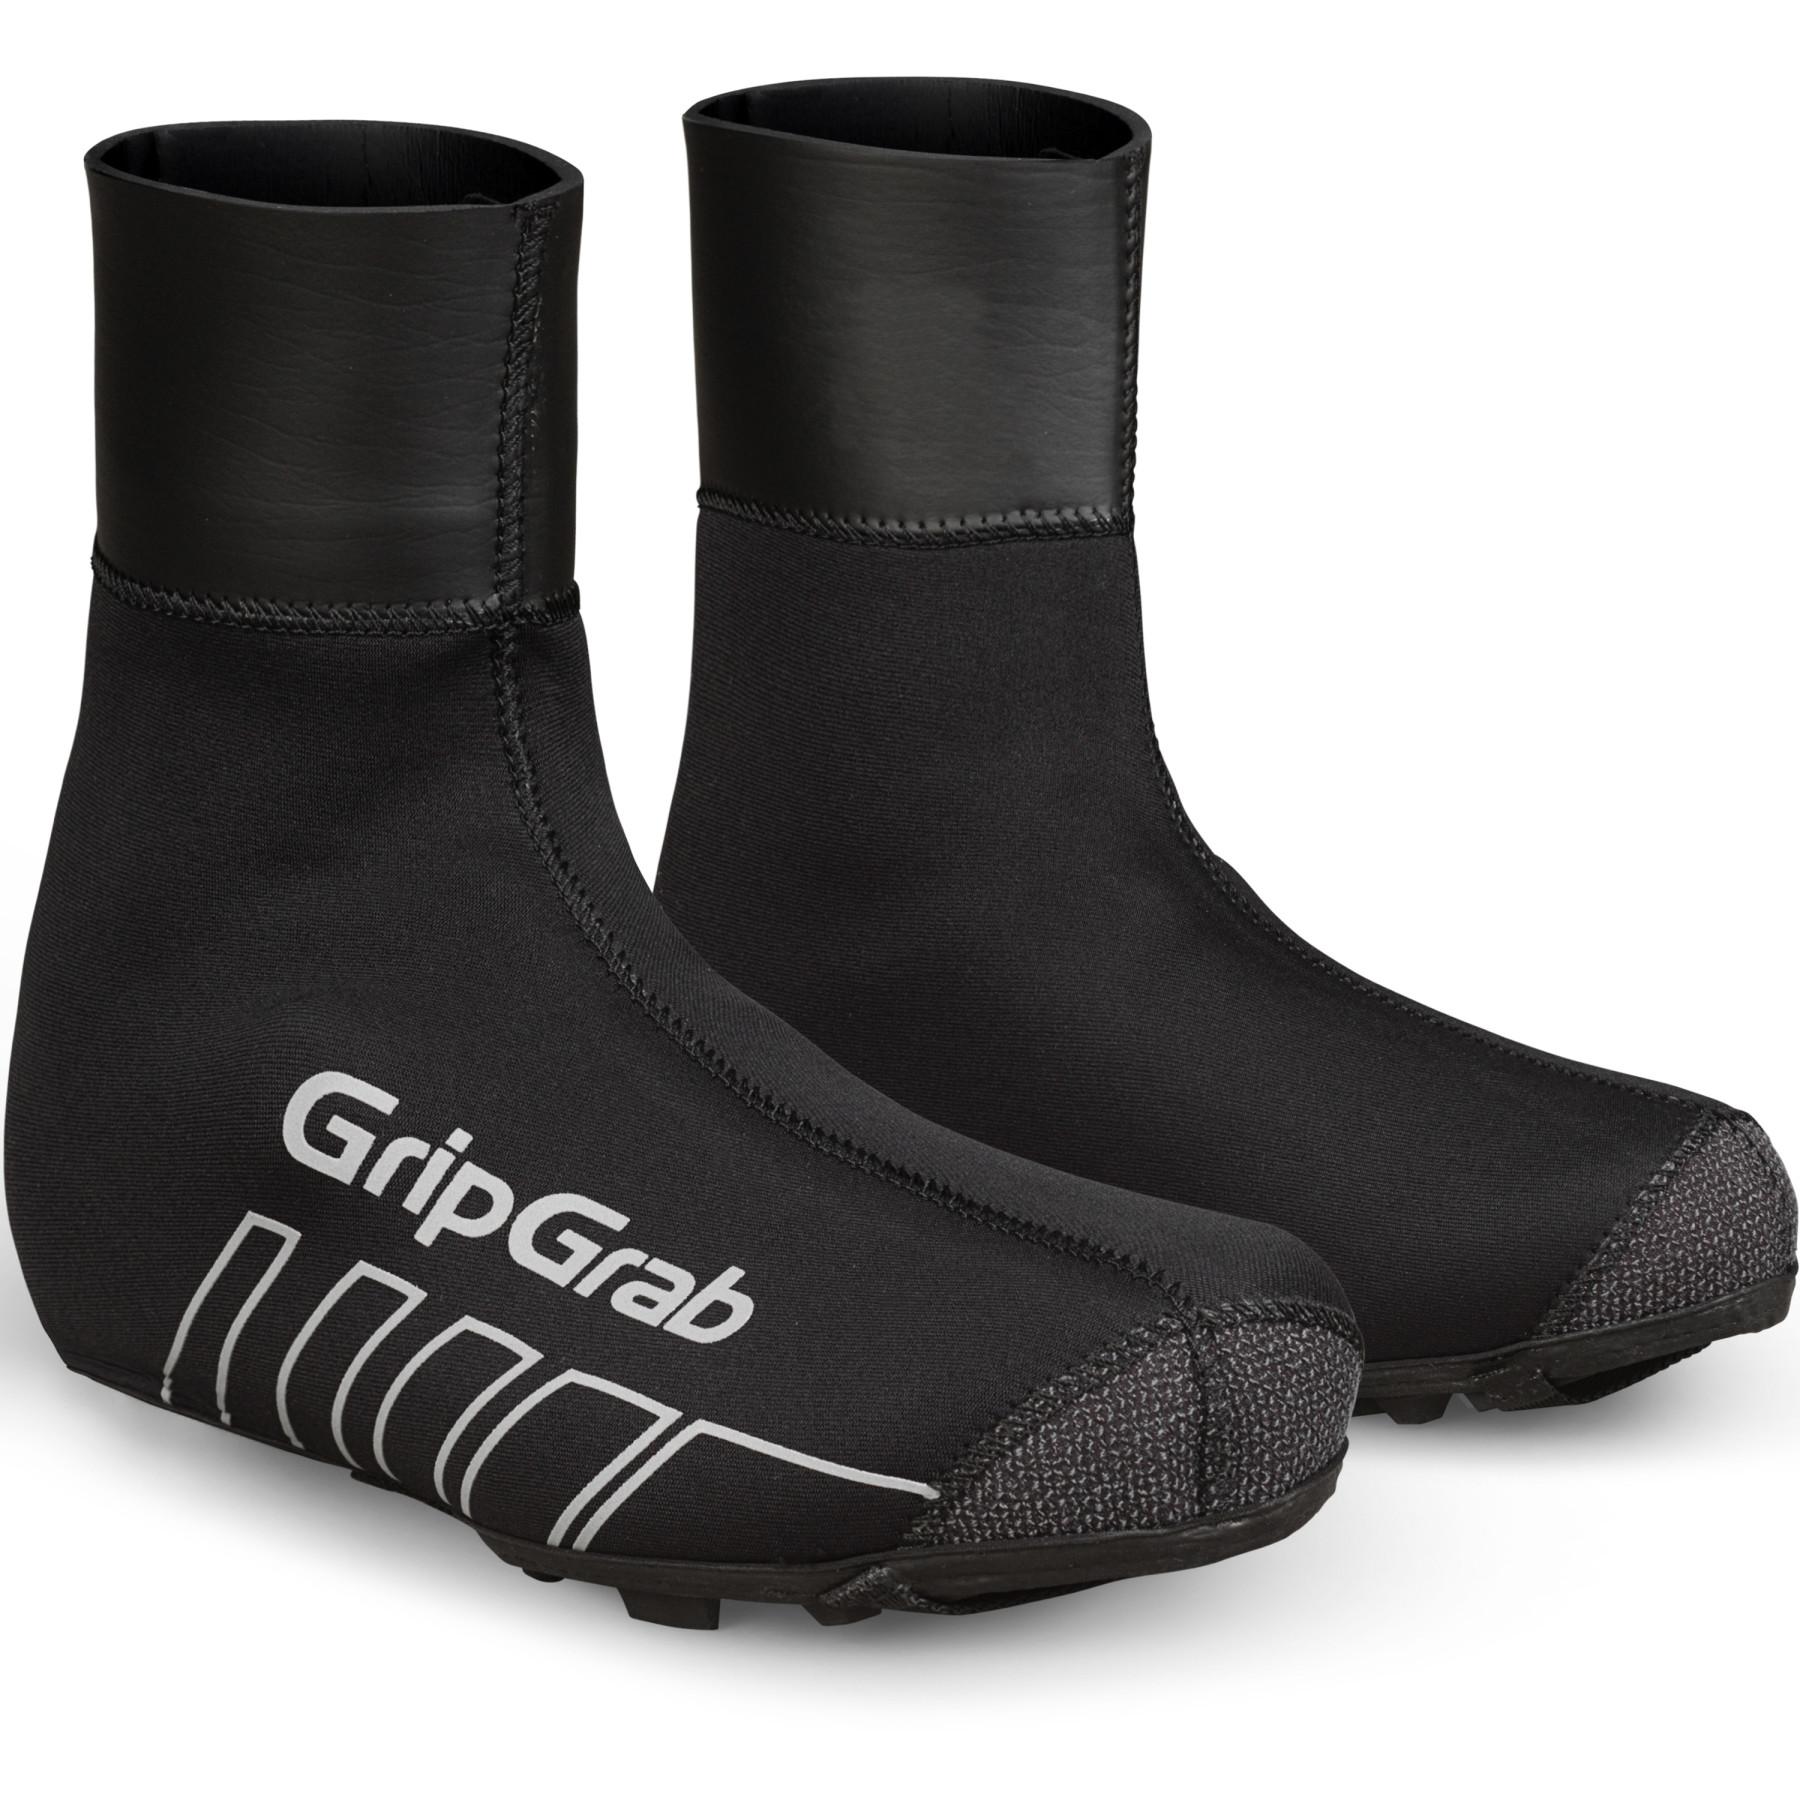 Gripgrab Racethermo X Waterproof Winter Mtb/cx Shoe Cover - Black